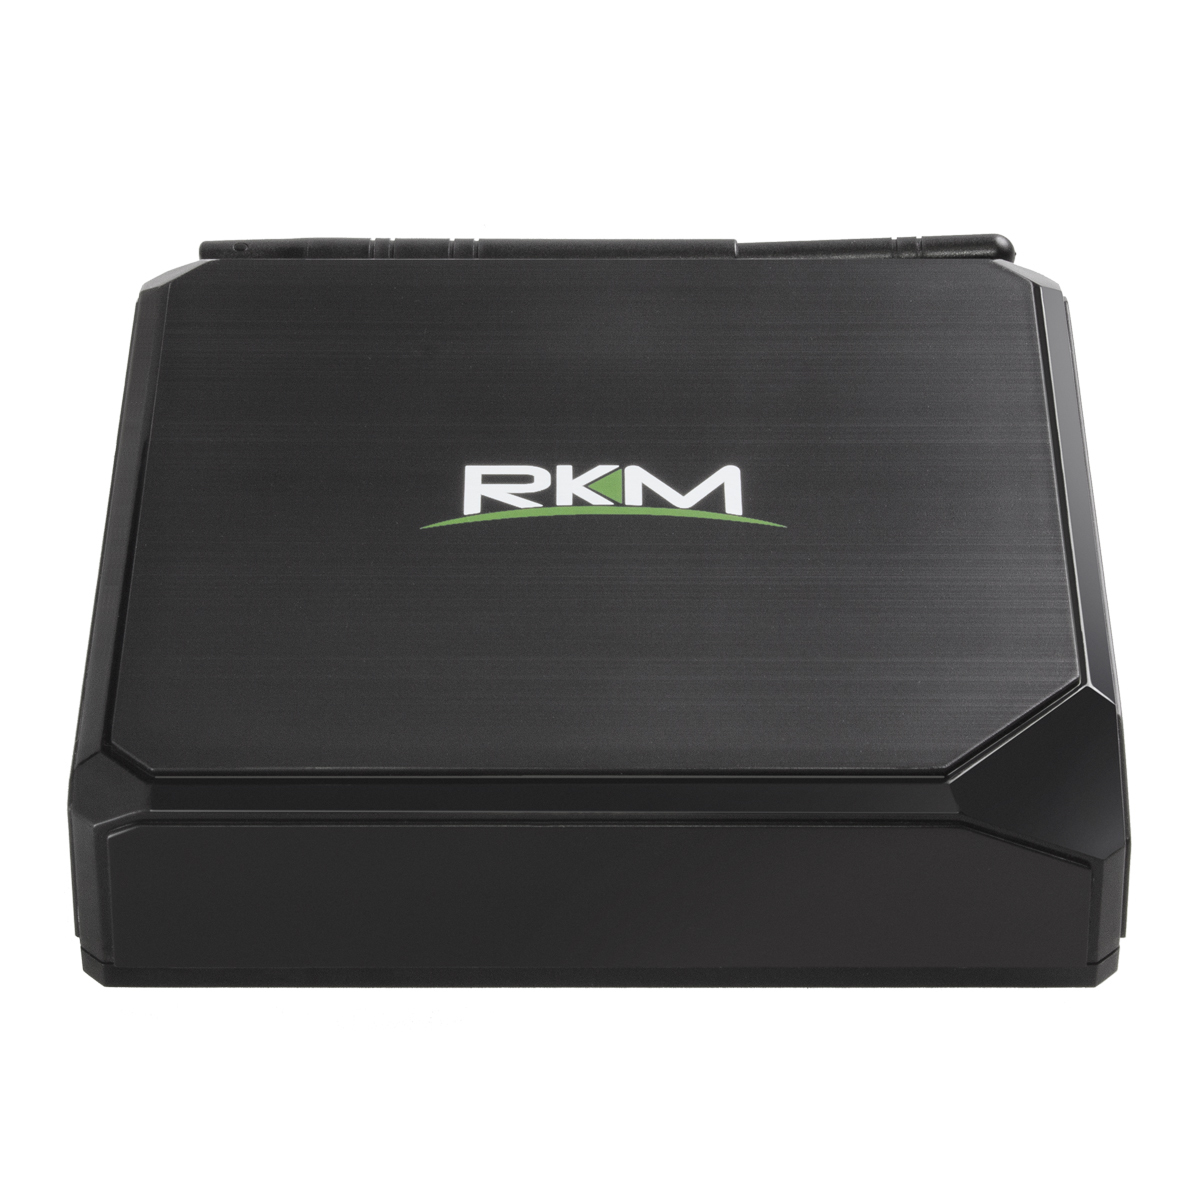 Rikomagic MK39, Rockchip RK3399, 2x A72 @ 2GHz, 4x A53, Mali-T860MP4 GPU up to 800MHz , GB LAN, Wifi b/g/n/ac, Bluetooth 4.1, 4GB RAM,32GB ROM, Anrdroid 7.1